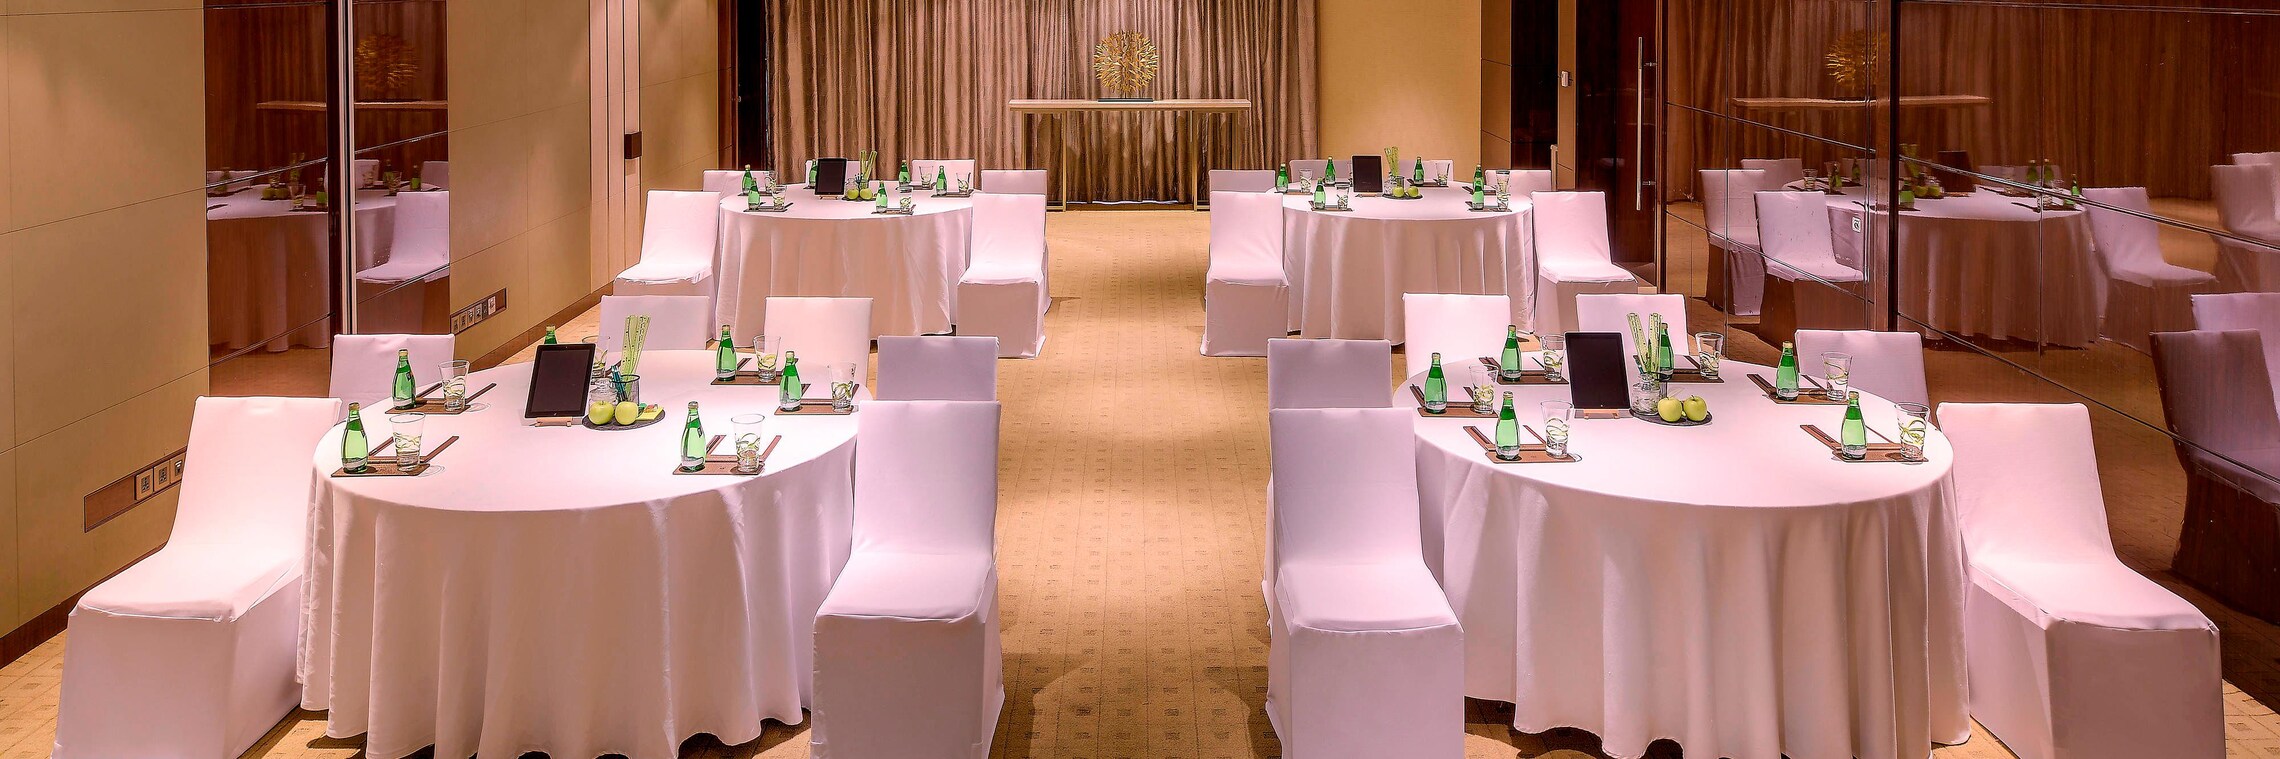 Jade Meeting Room - Banquet Setup